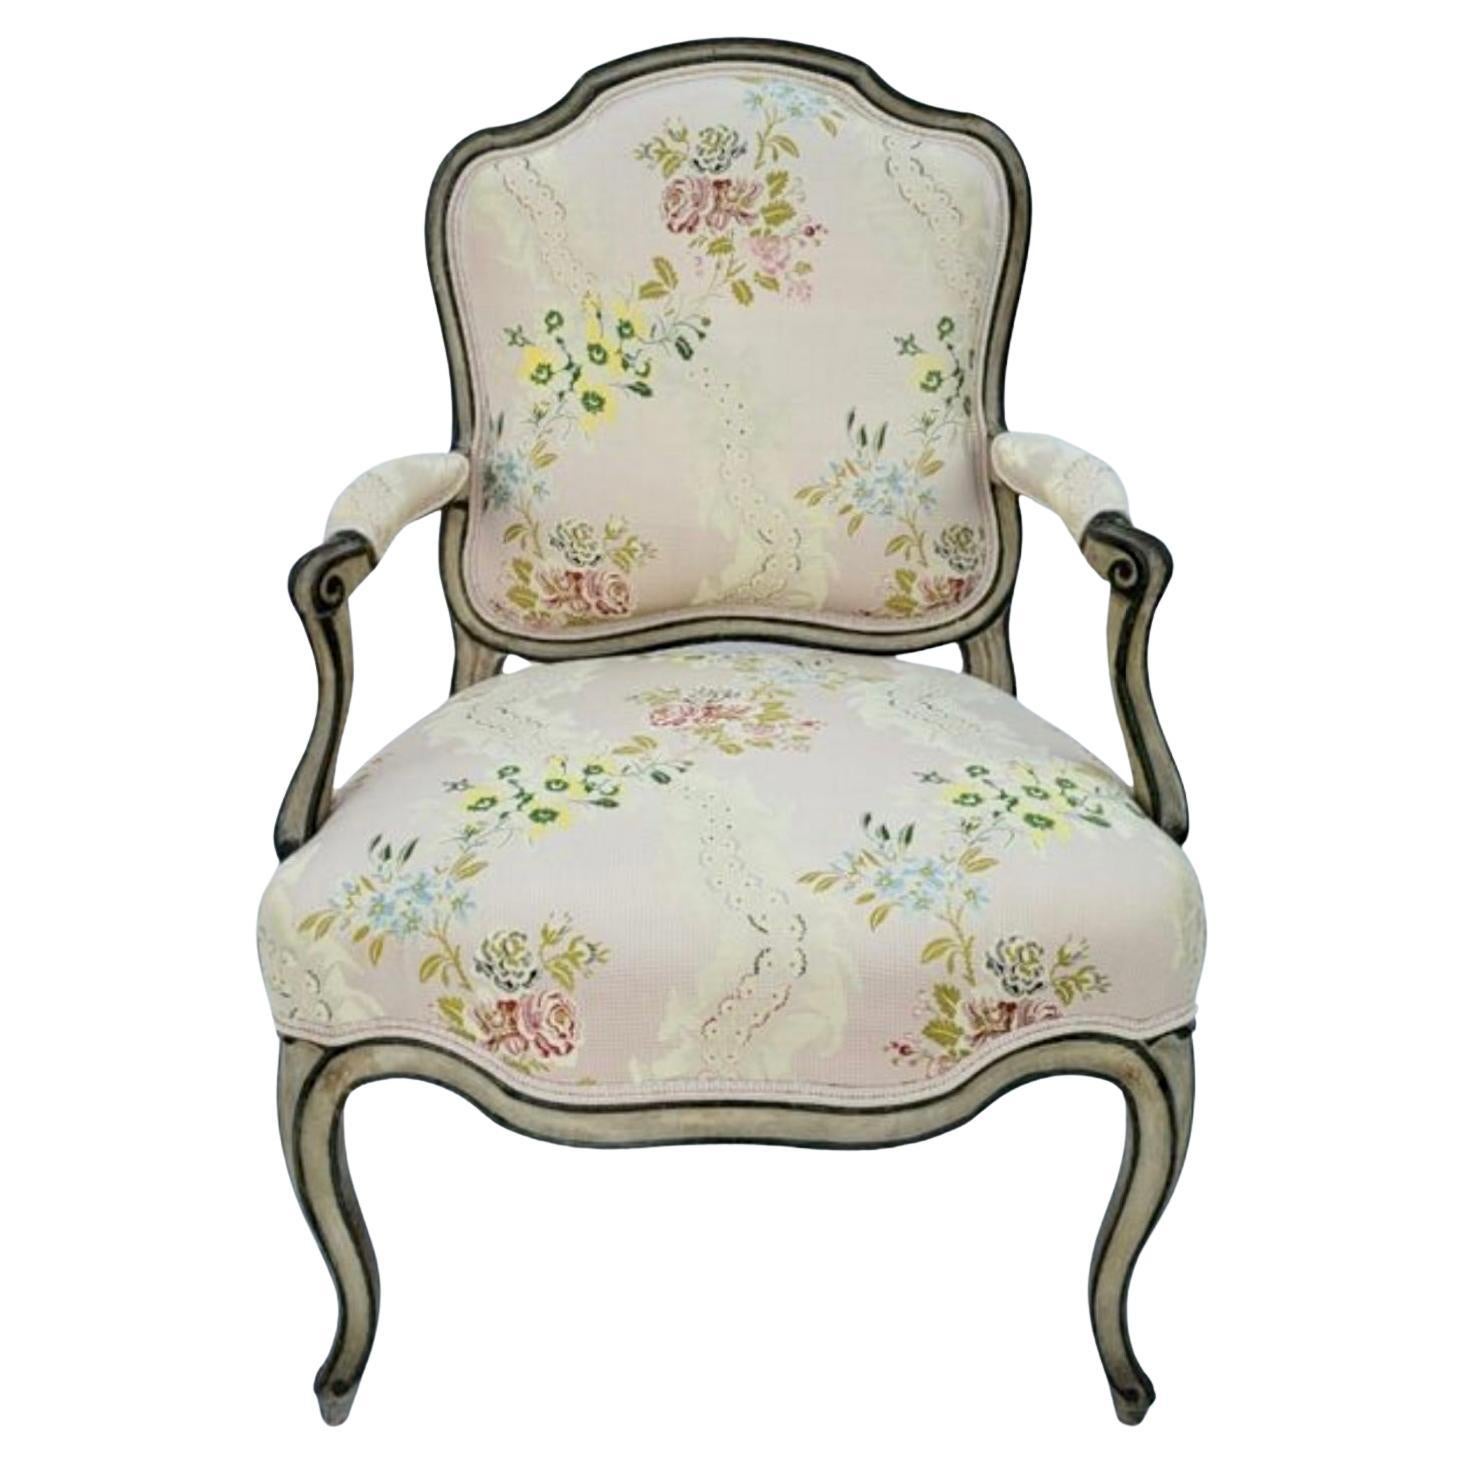 Antique Louis XV Style Fauteuil Arm Chair